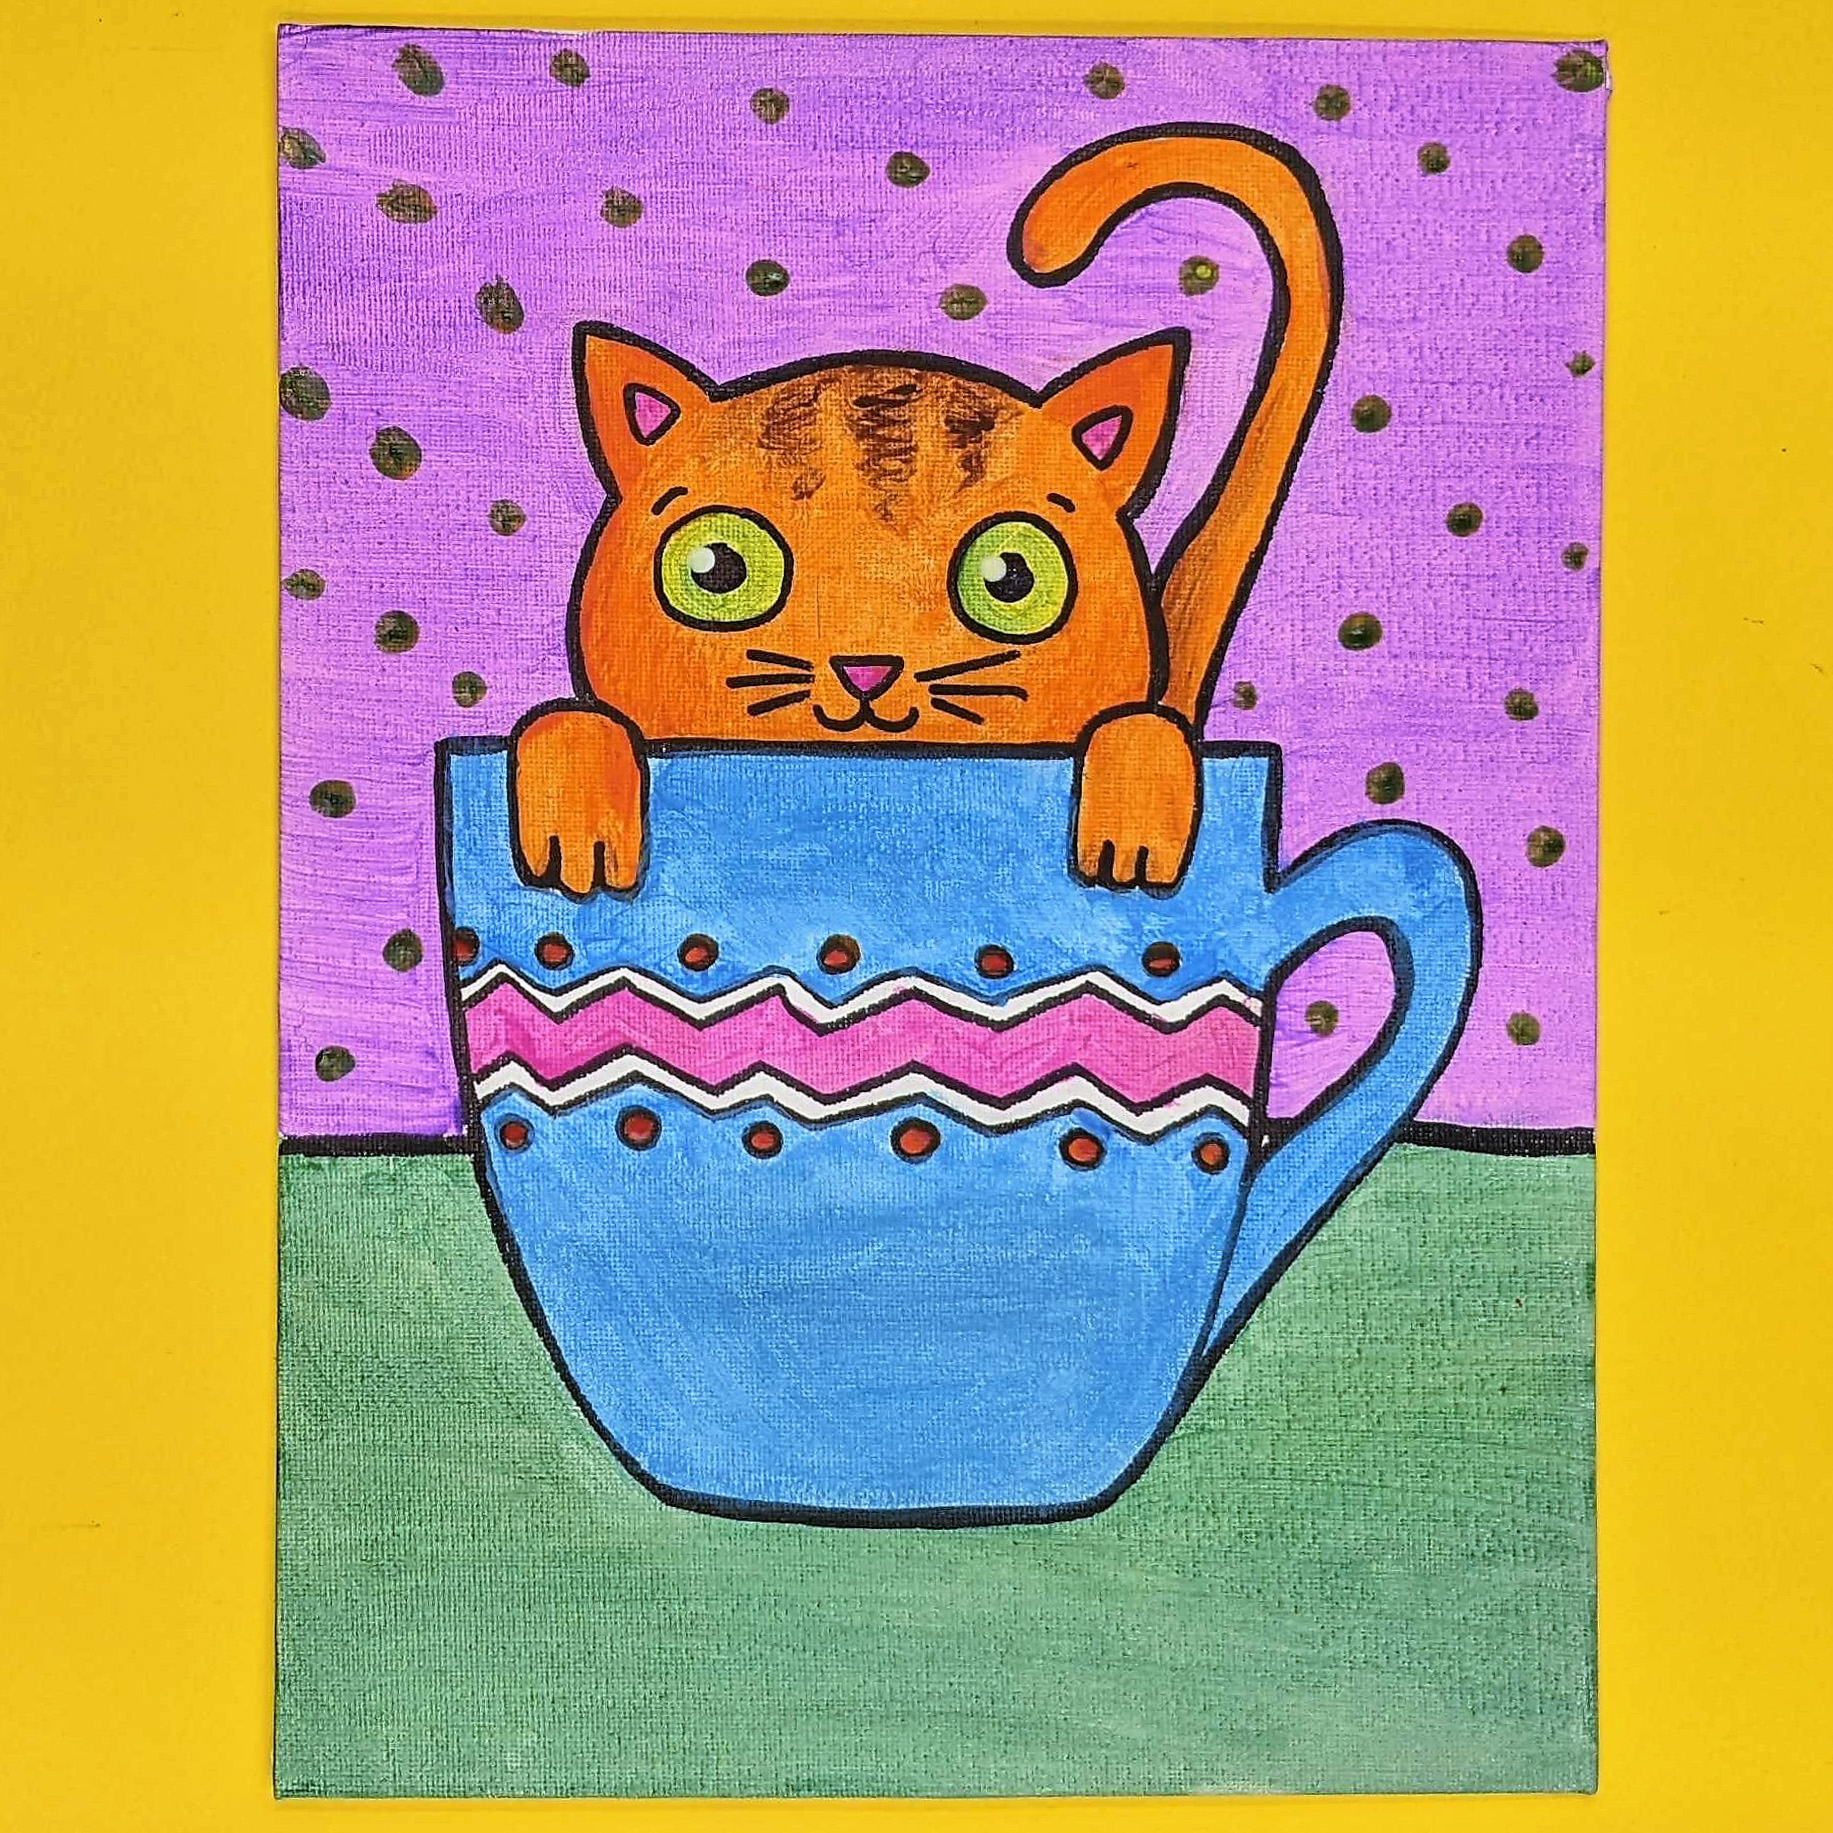 Kidcreate Mobile Studio - Aliso Viejo, Teacup Kitten Art Project